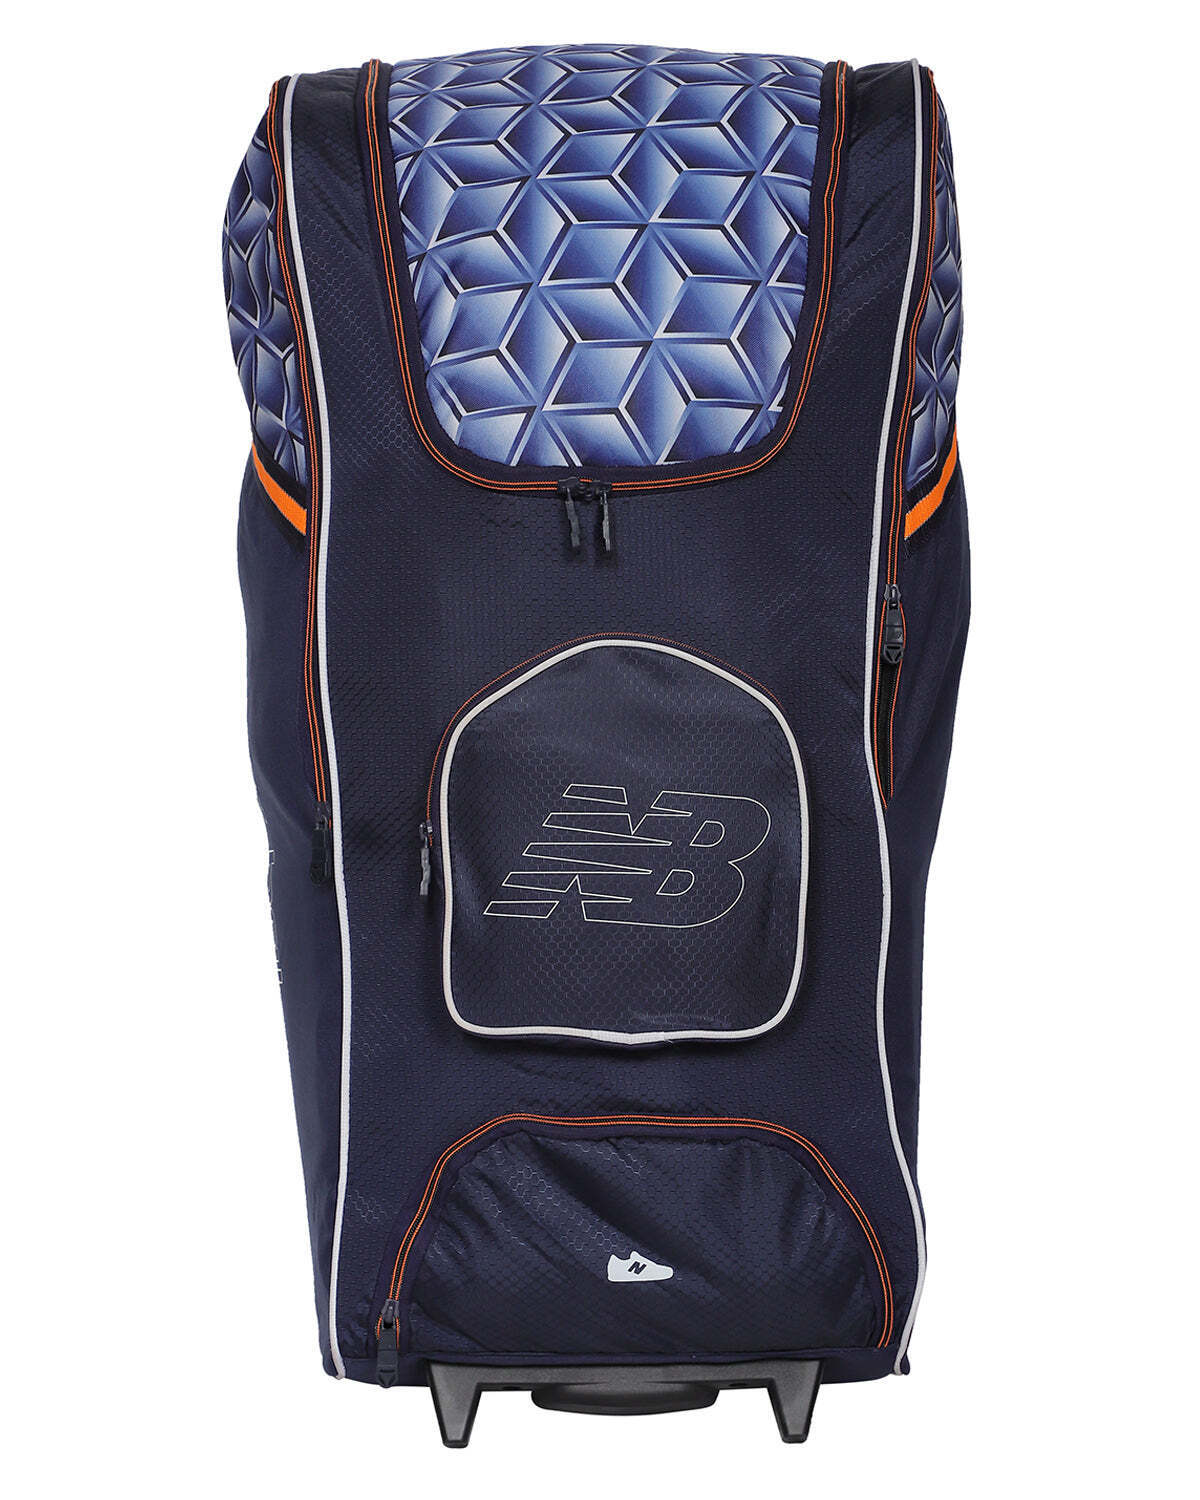 NB Cricket Kit Bag DC 1280 Adult Duffle